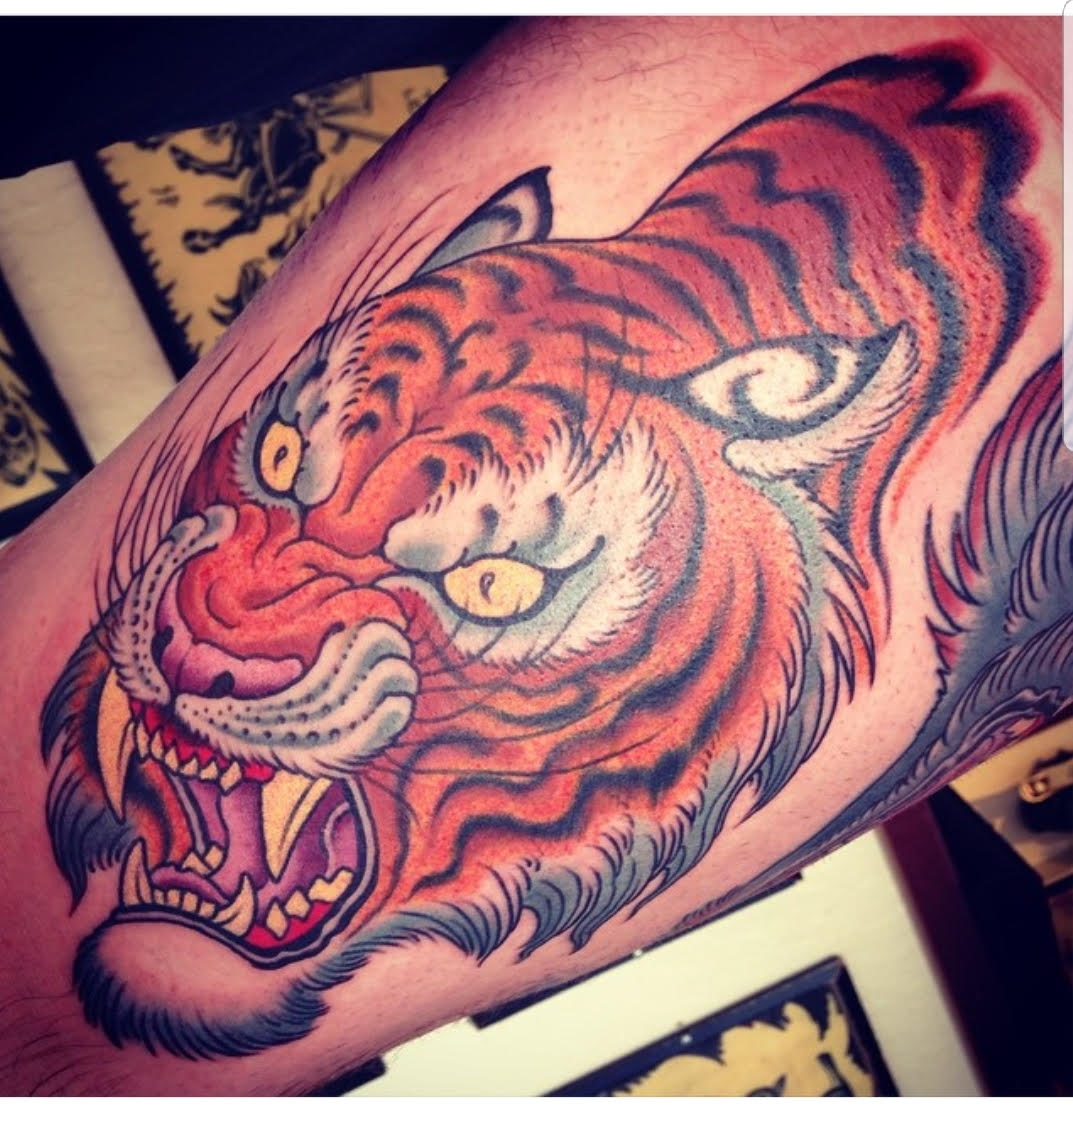 americana-tiger-tattoo-david-parker.jpg